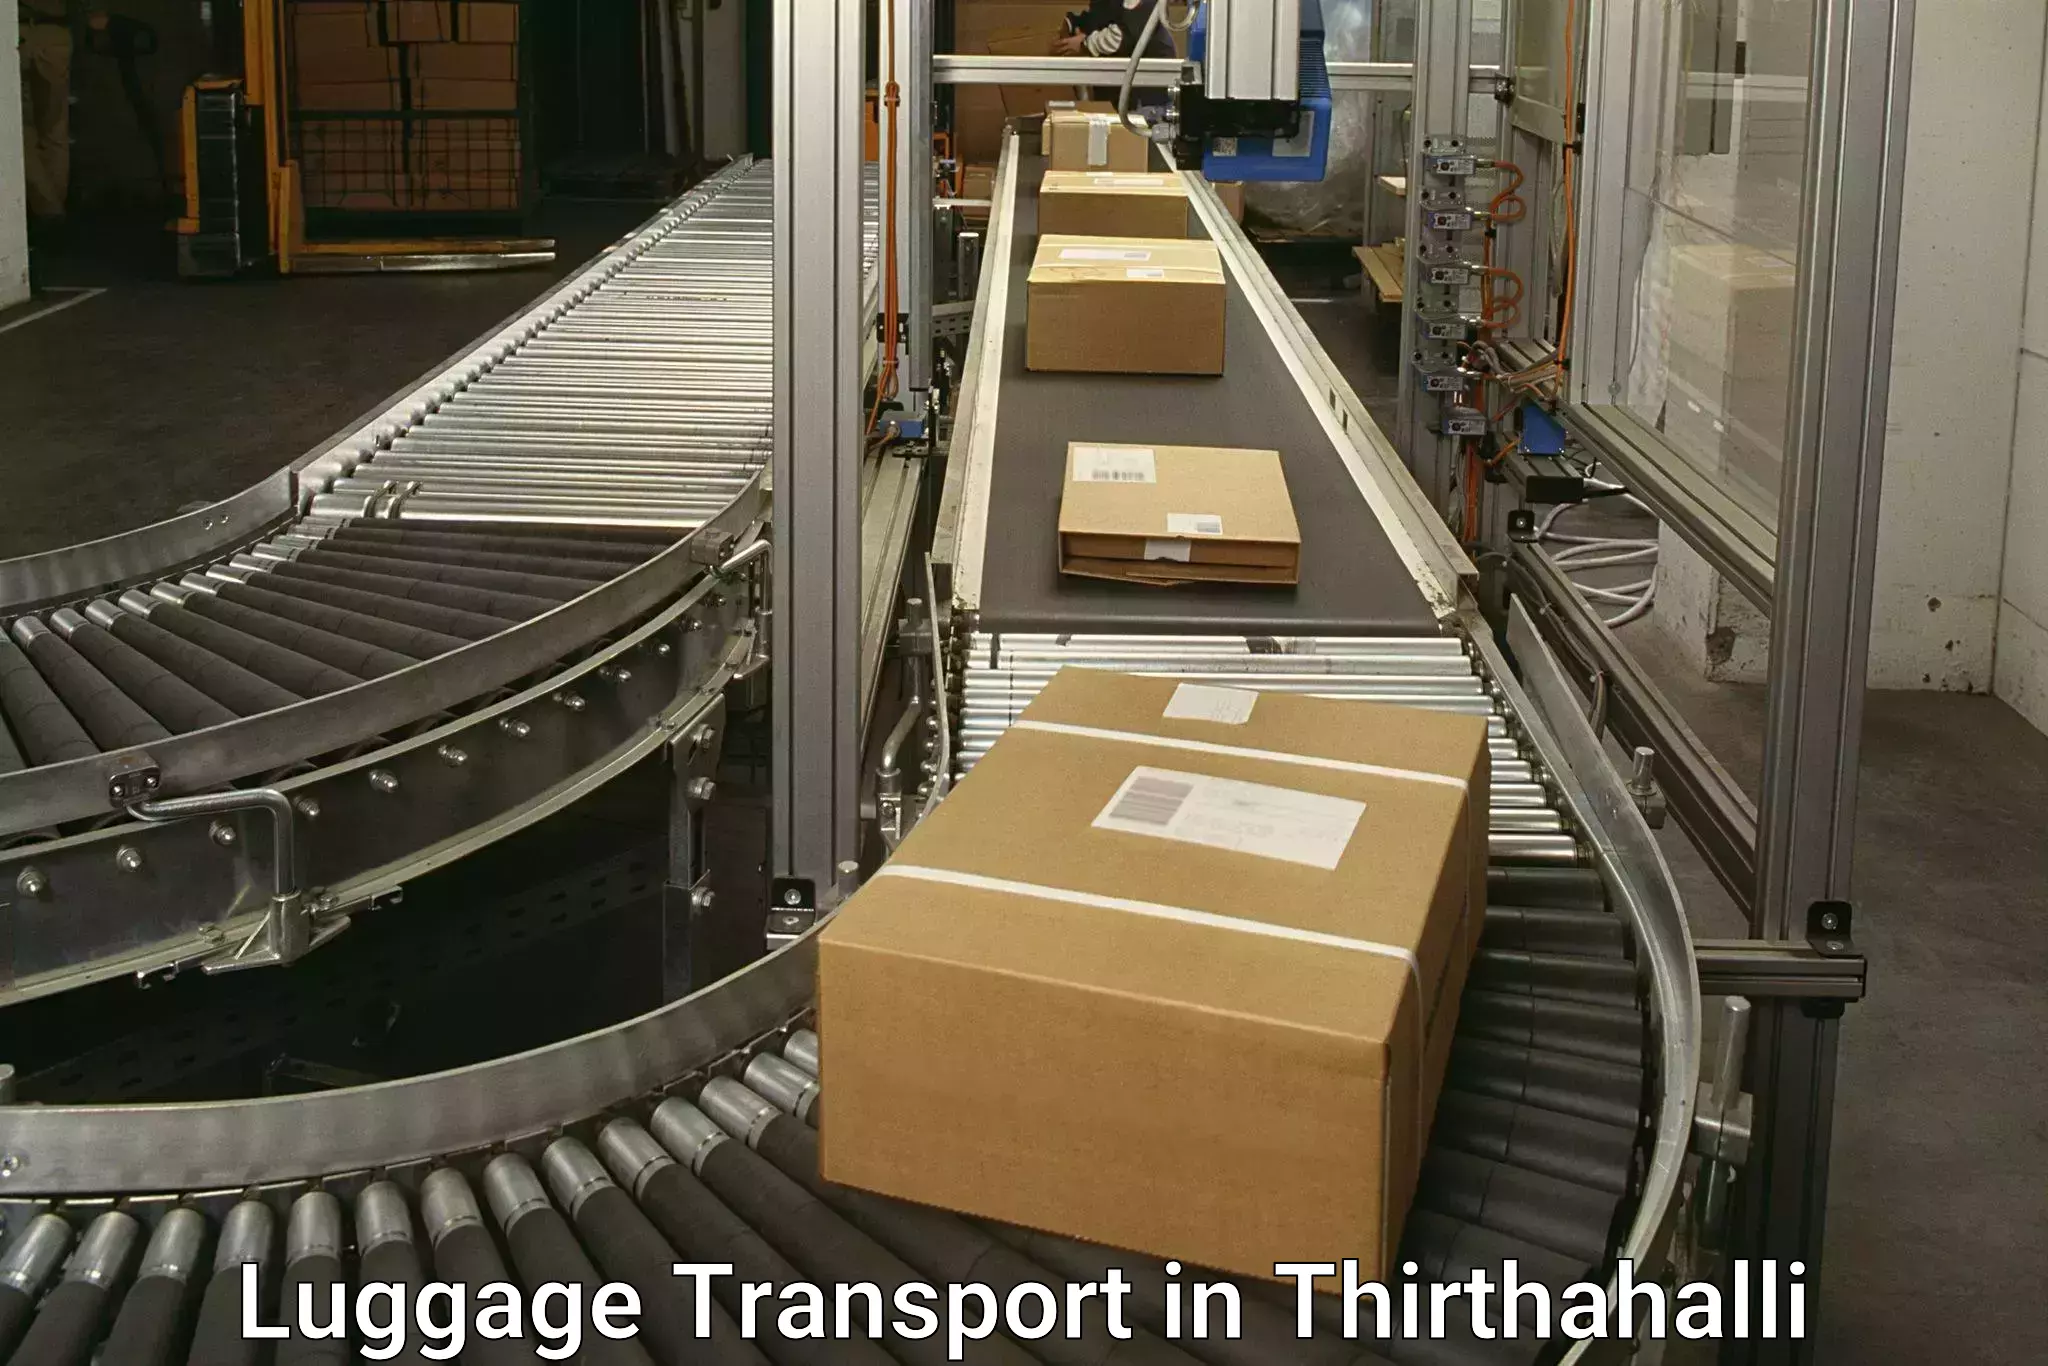 Baggage transport network in Thirthahalli